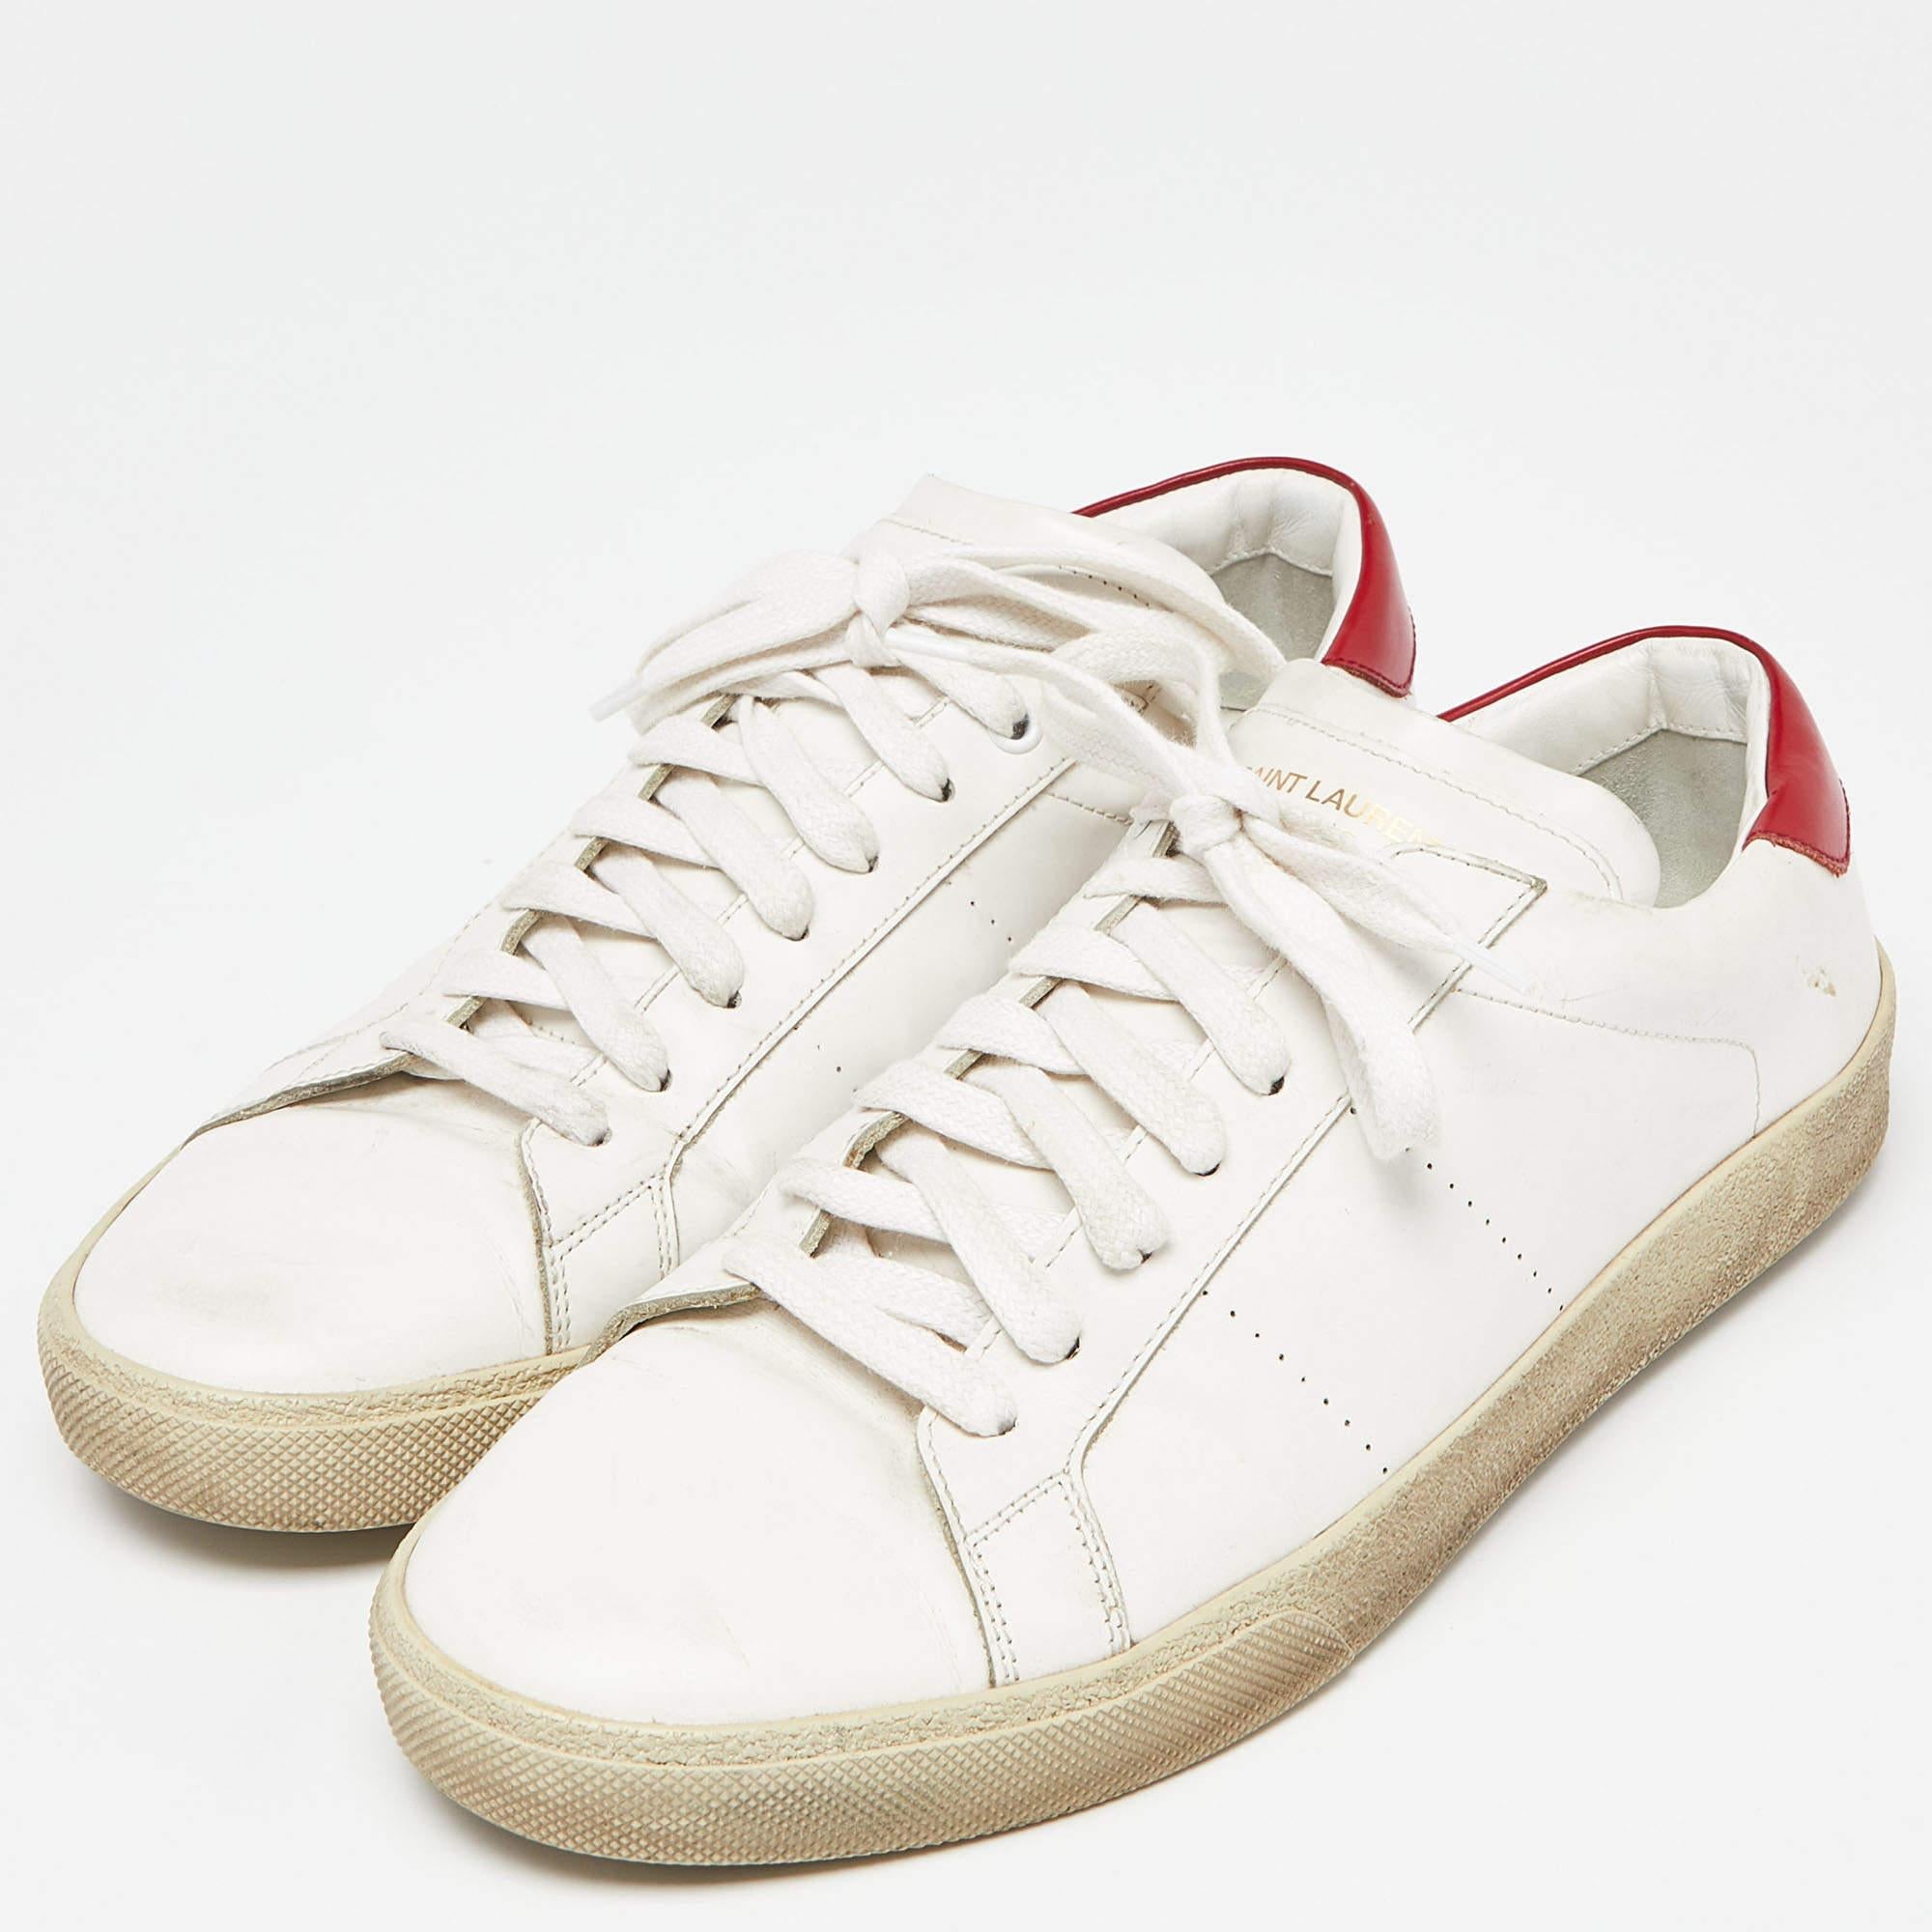 Men's Saint Laurent White Leather Lace Up Sneakers Size 43